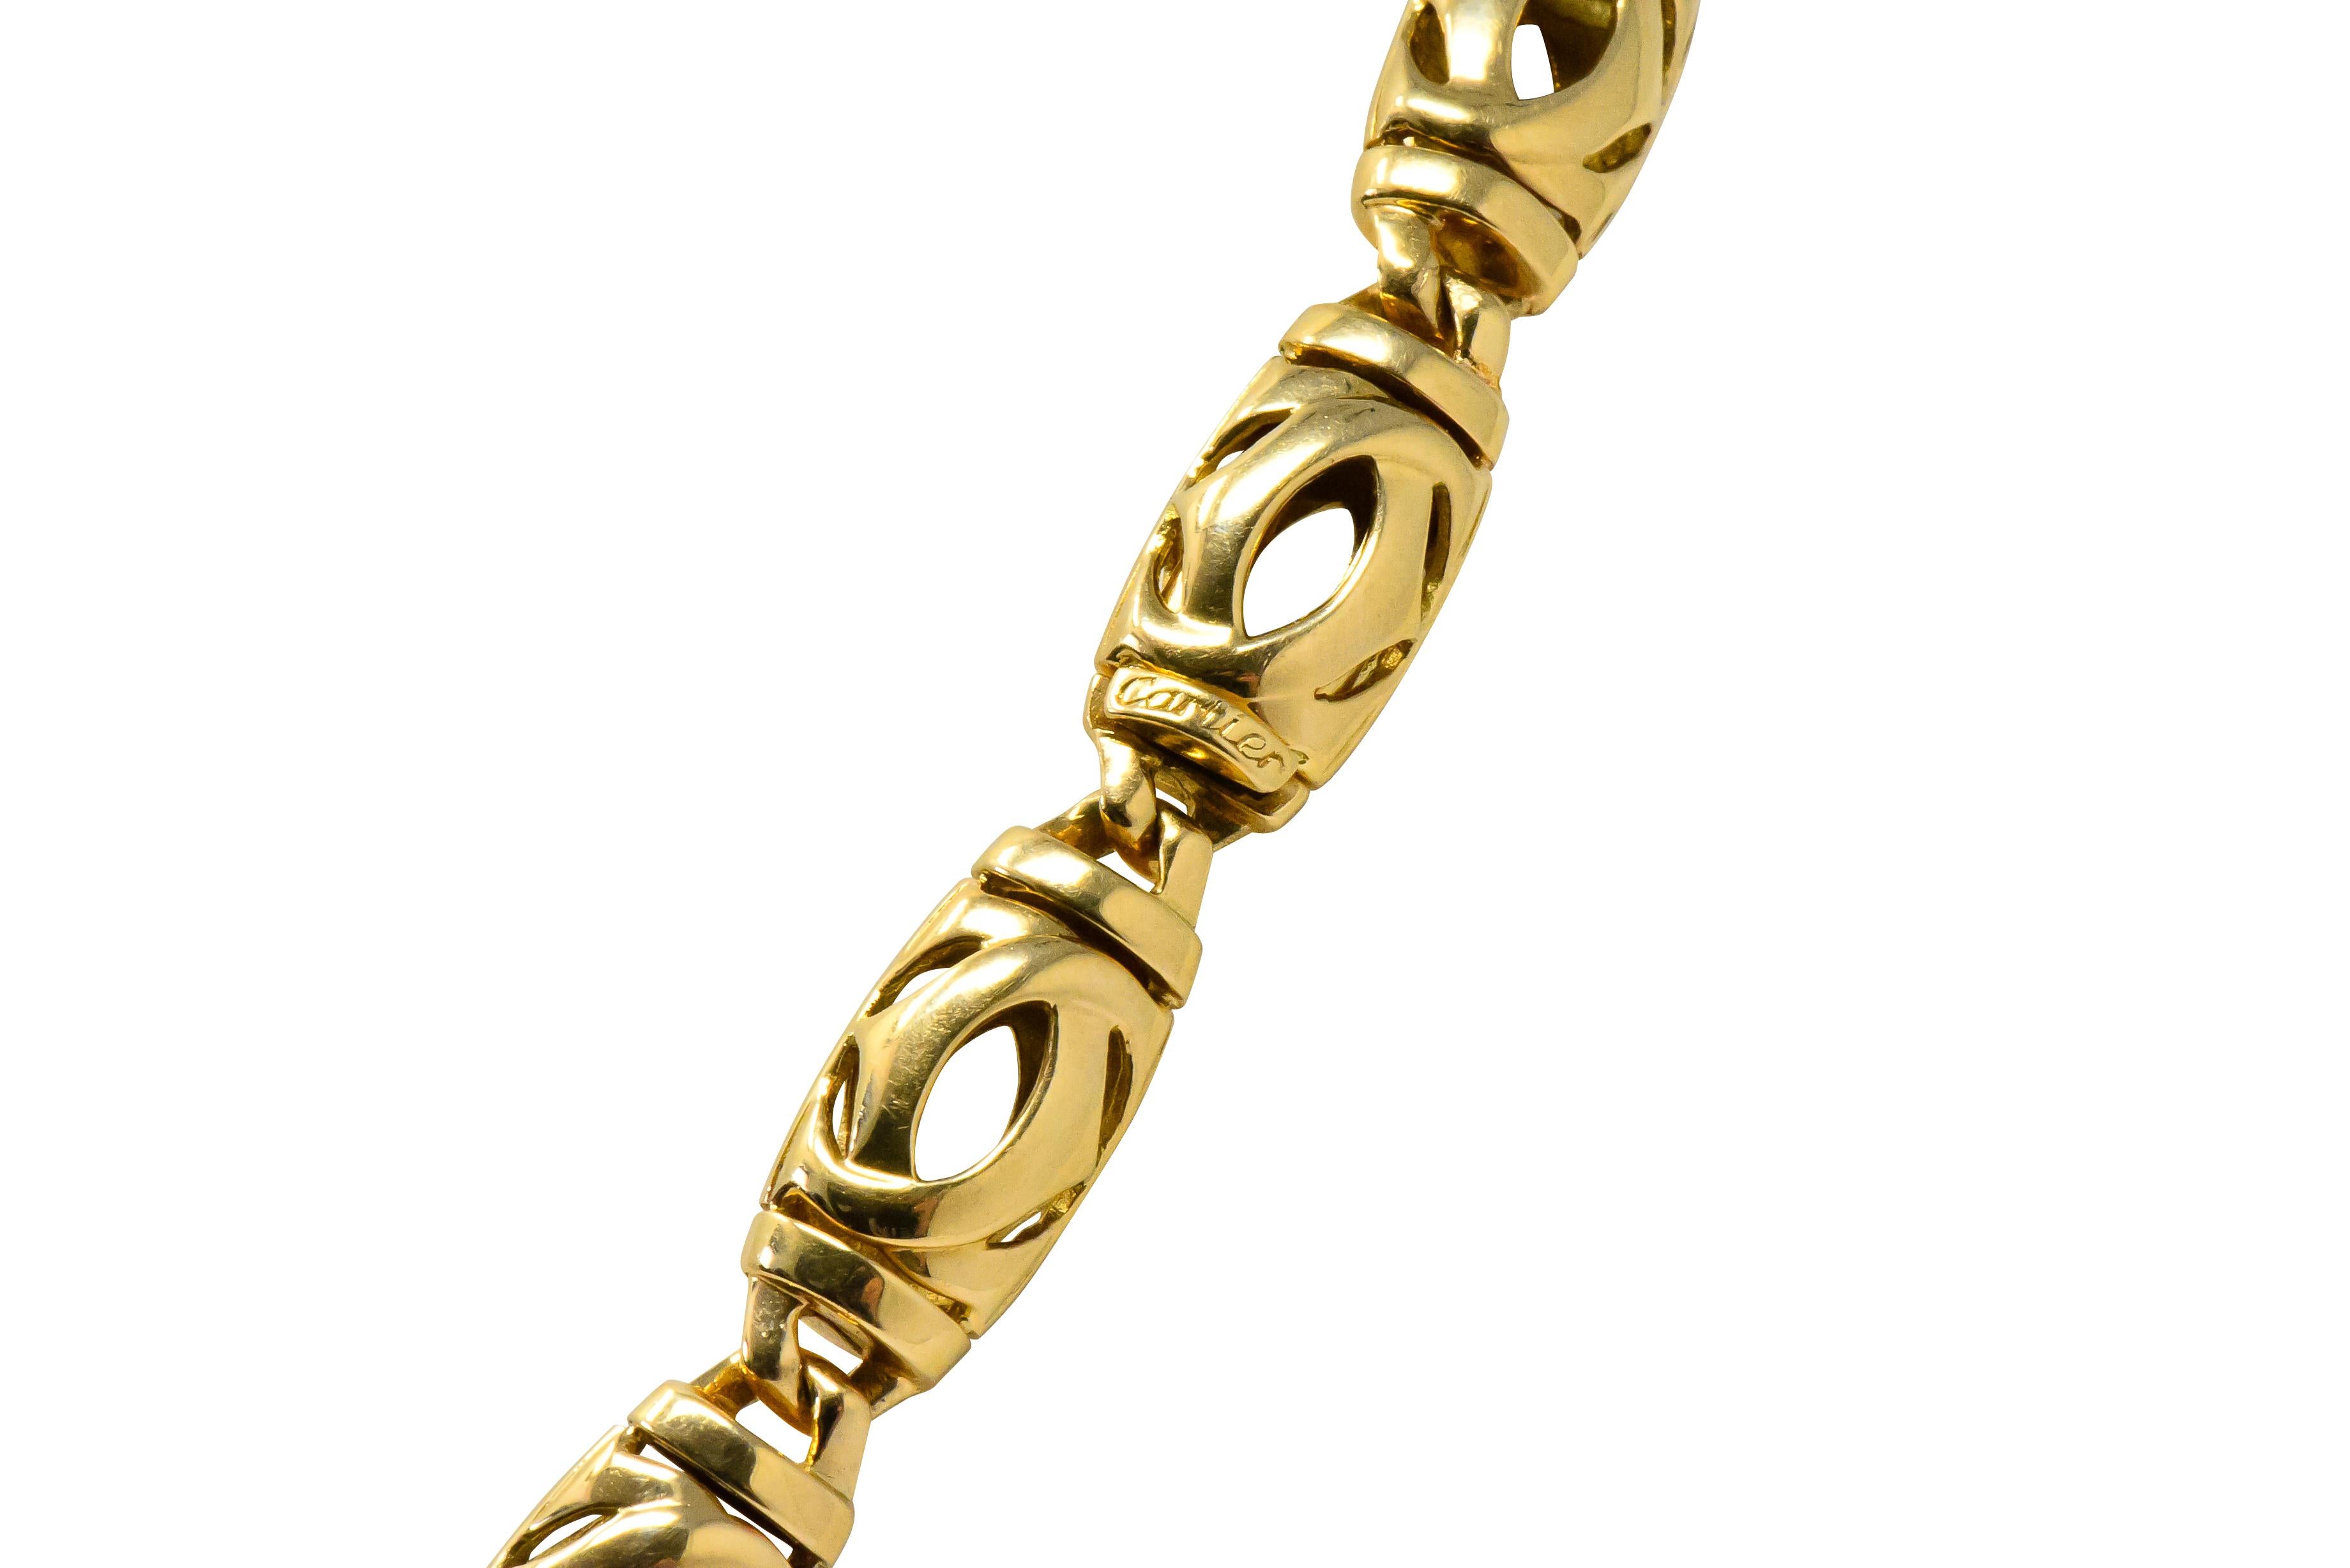 Contemporary Cartier 18 Karat Gold Unisex Chain Necklace